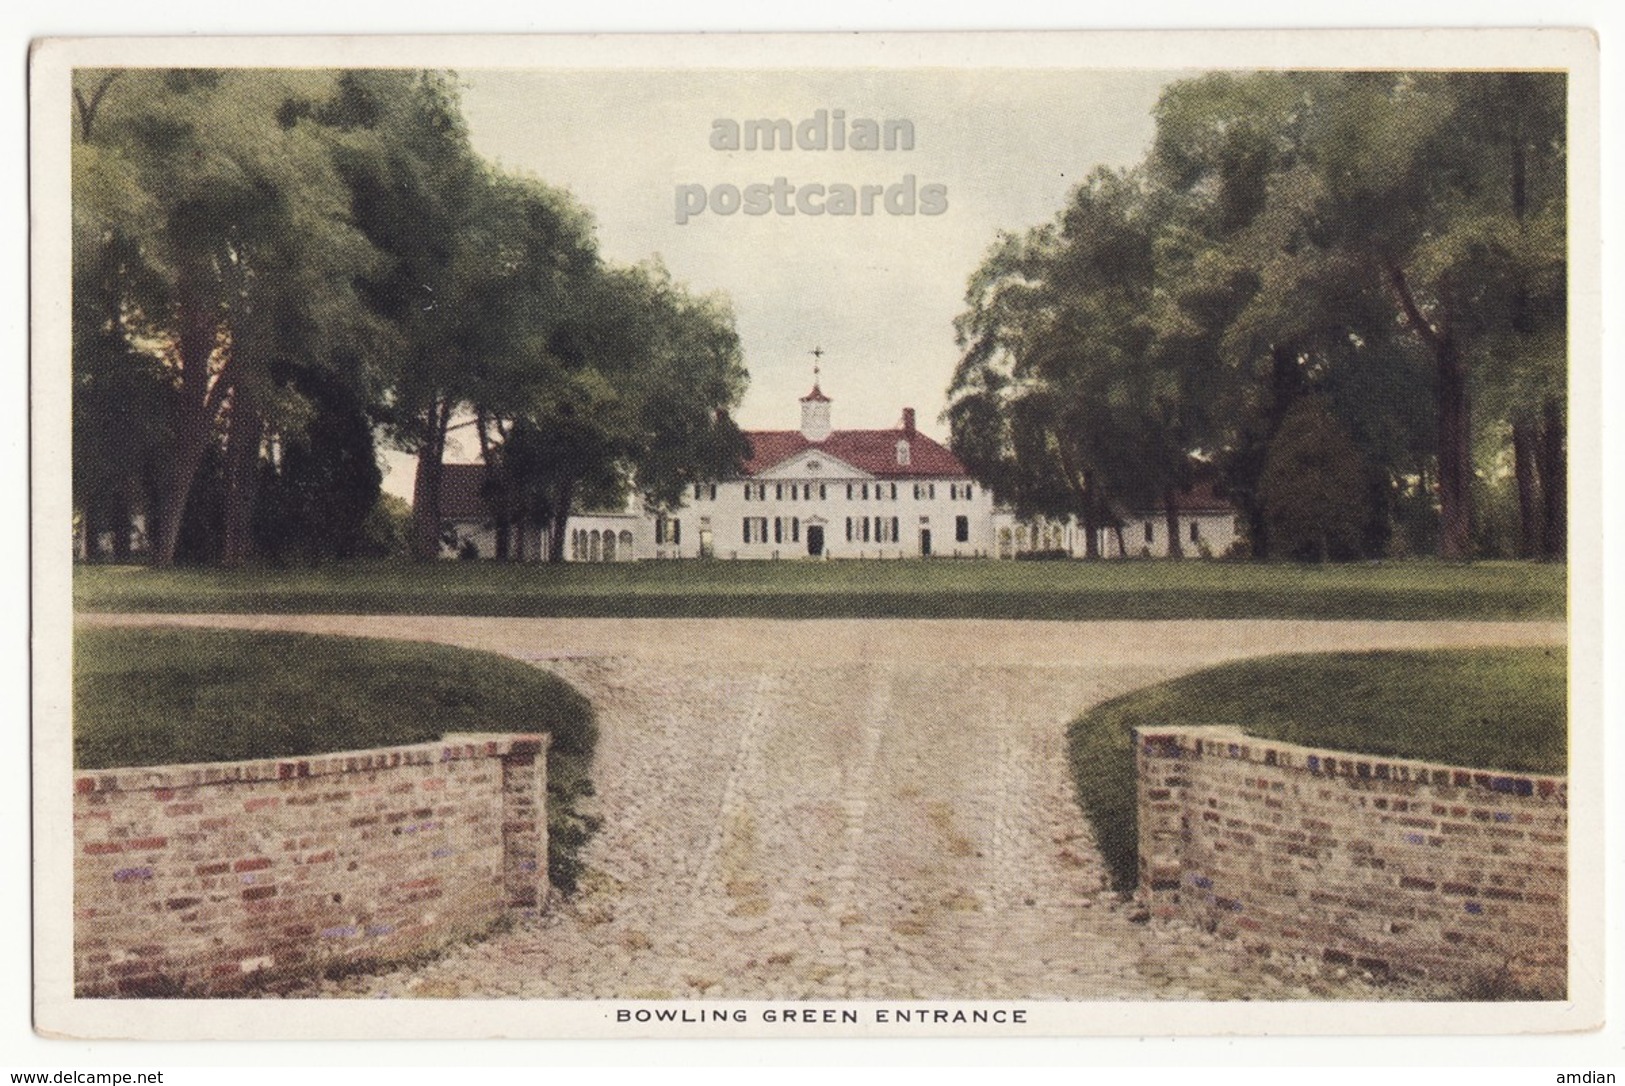 USA, MT VERNON MANSION VA, BOWLING GREEN ENTRANCE, Washington Historic, Antique 1920 Unused Vintage Postcard - History